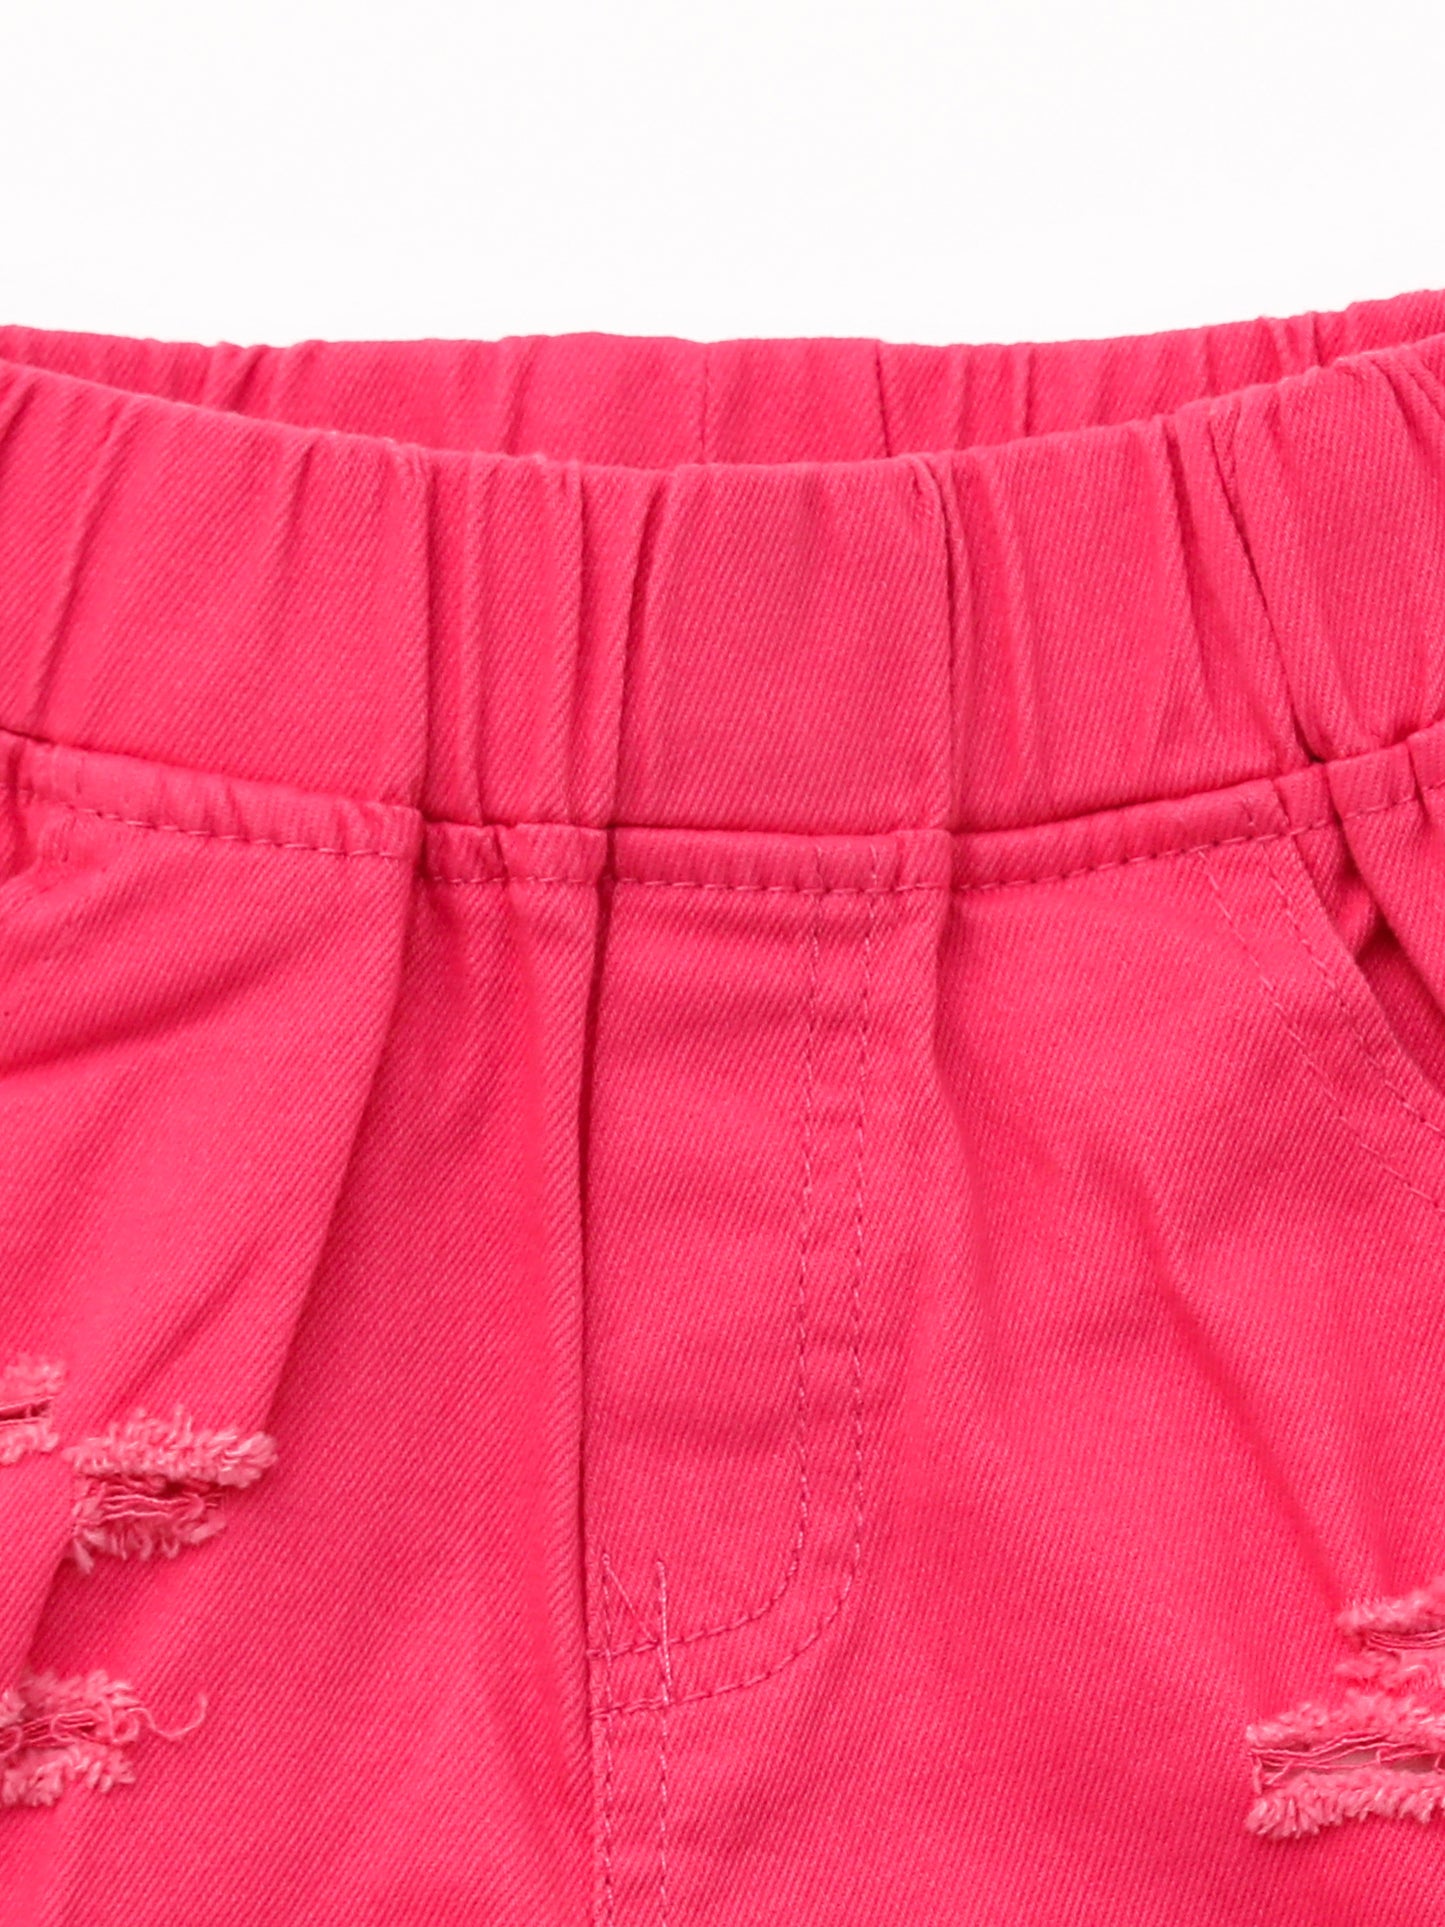 Girls Distressed Hot Pink Denim Shorts